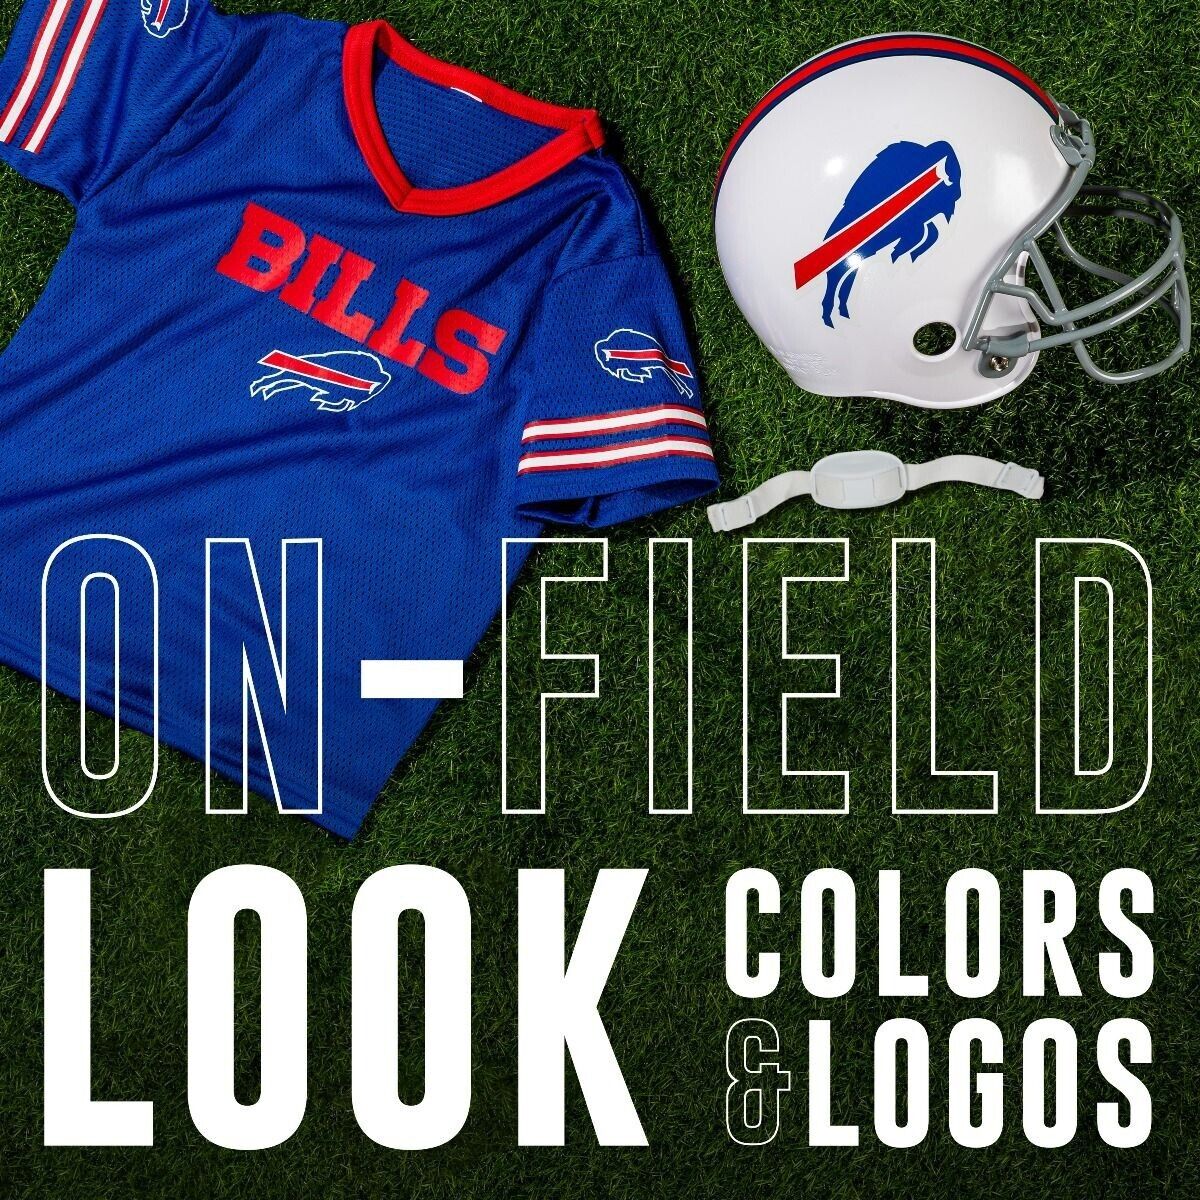 Buffalo Bills Kids NFL 3pc Uniform Set, Ages 5-9